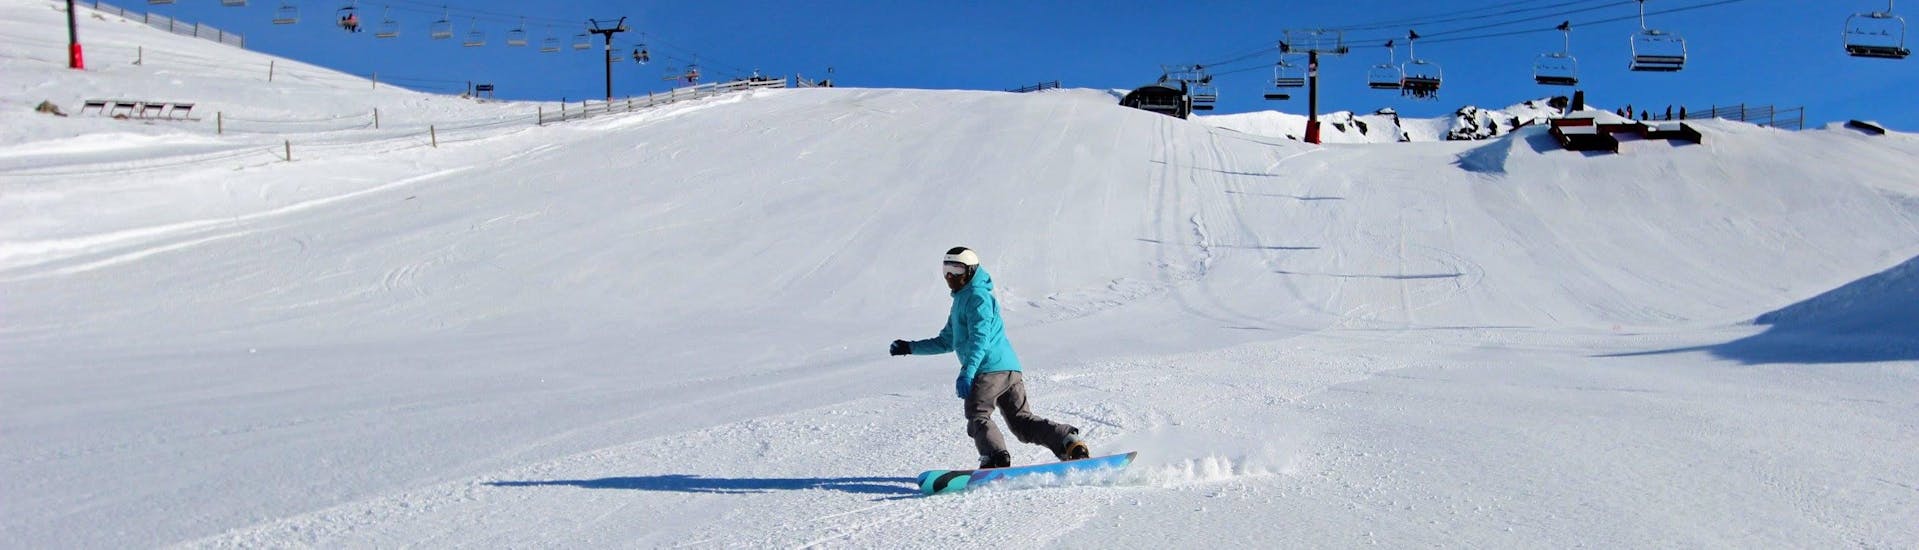 Lezioni di Snowboard a partire da 5 anni per tutti i livelli.